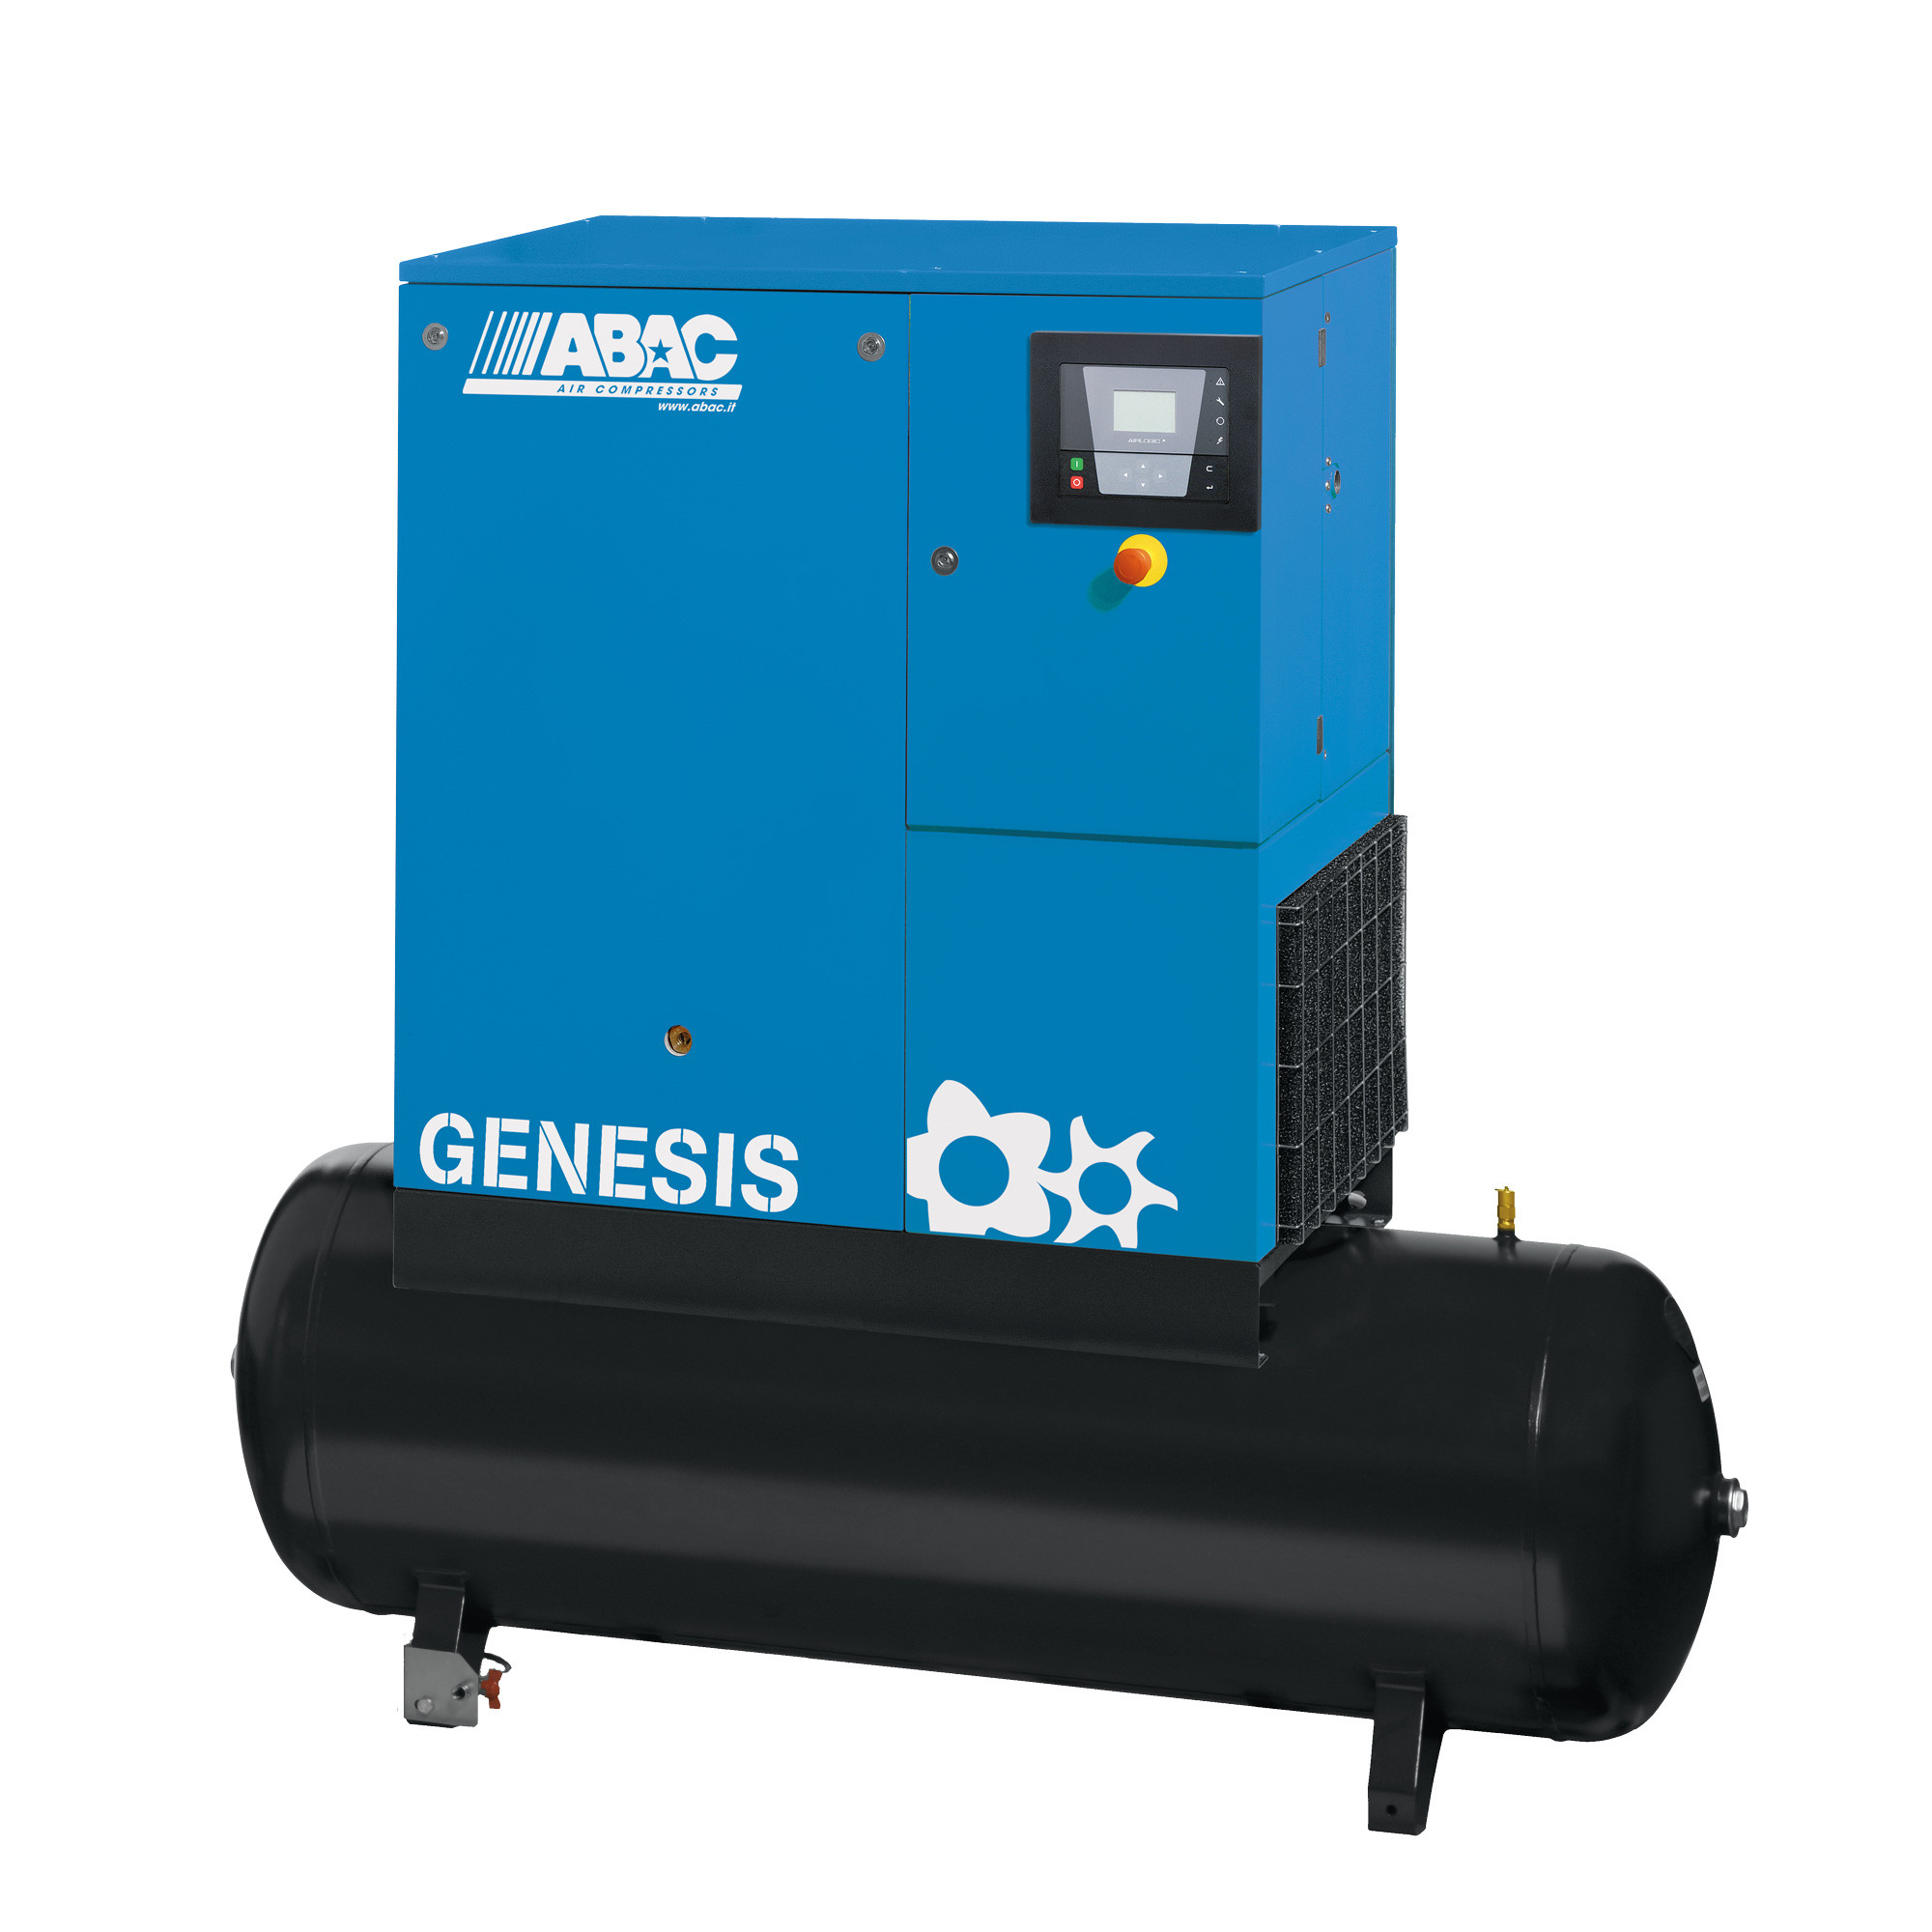 ABAC Genesis 500L, 43.4 CFM, 7.5 kW固定转速螺杆空压机